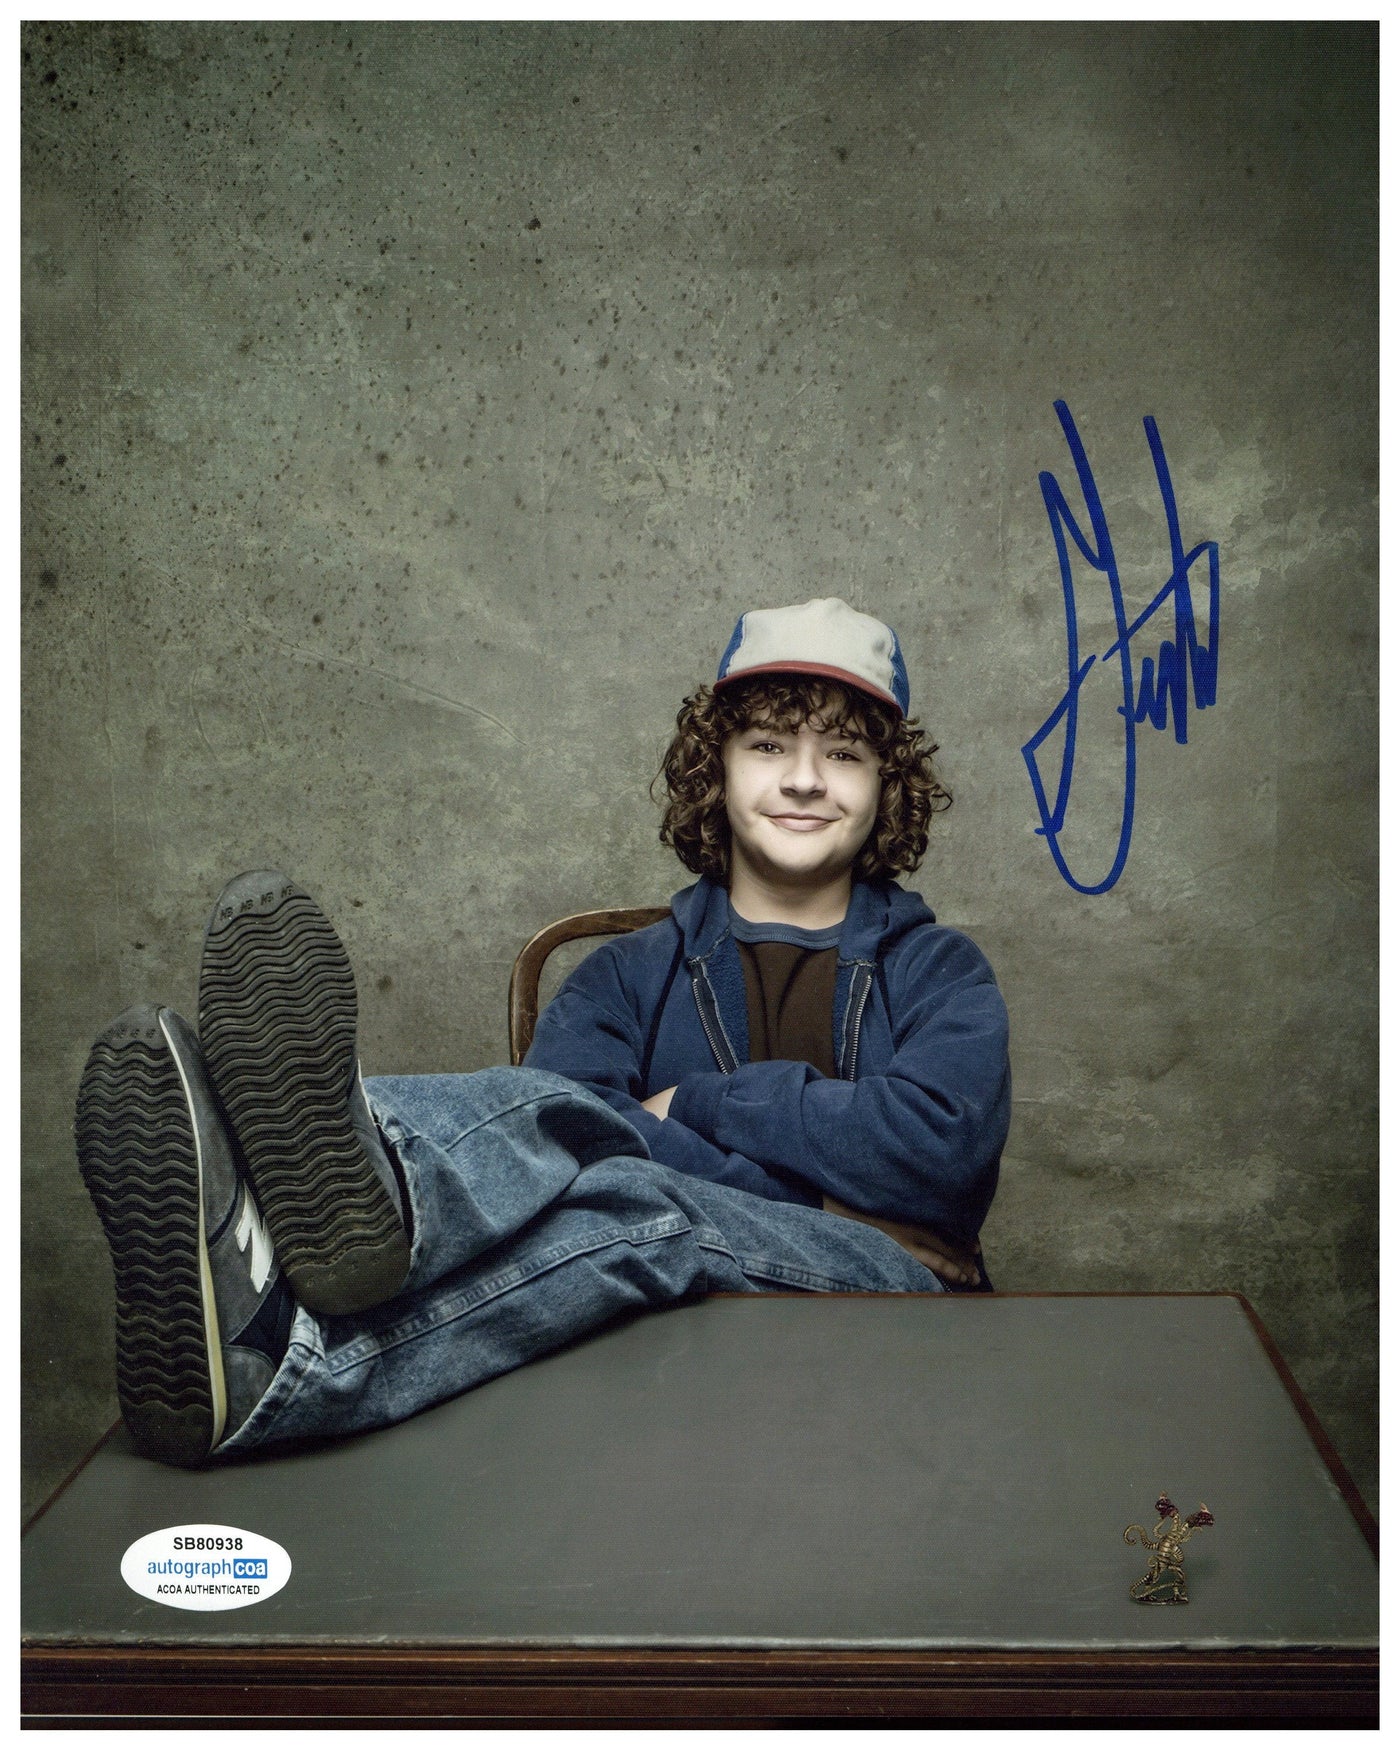 Gaten Matarazzo Signed 8x10 Photo Stranger Things Authentic Autographed ACOA #3